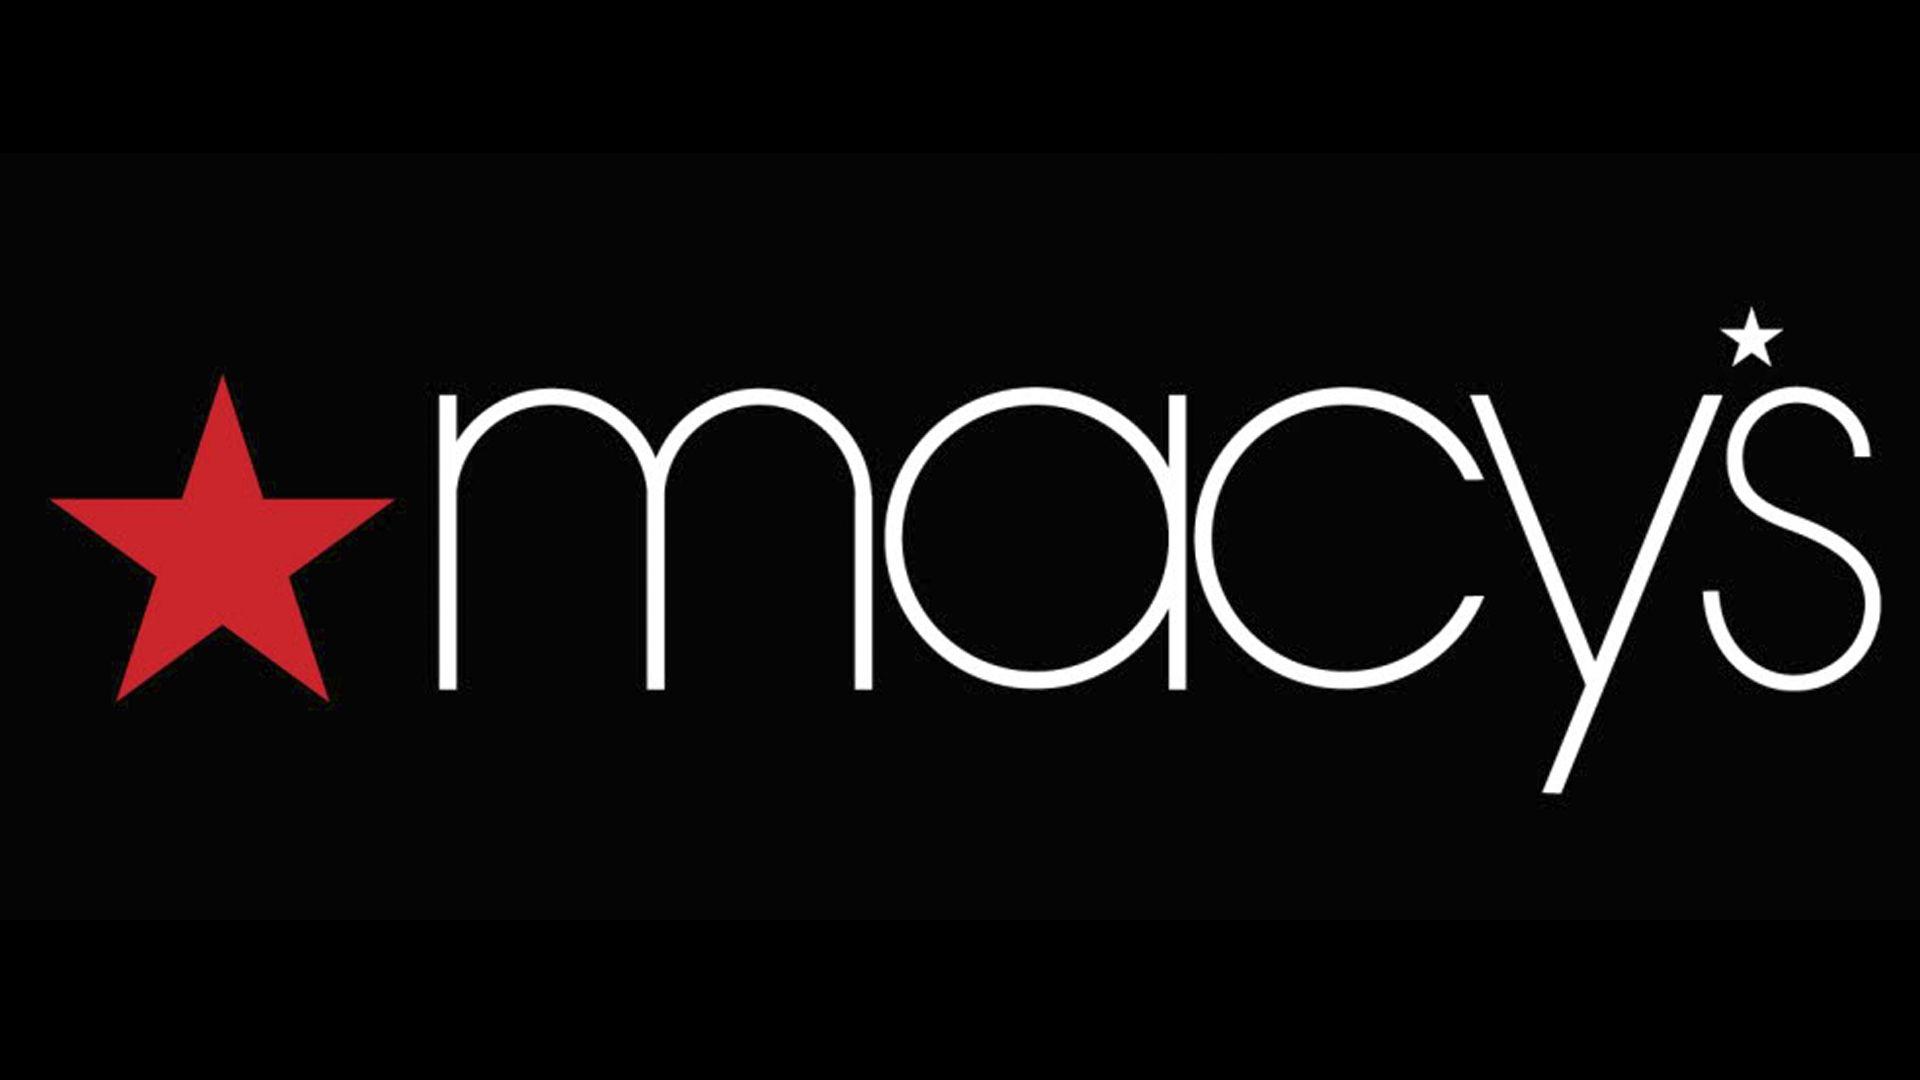 Macy's Star Logo - Macys Logo, Macys Symbol, Meaning, History and Evolution